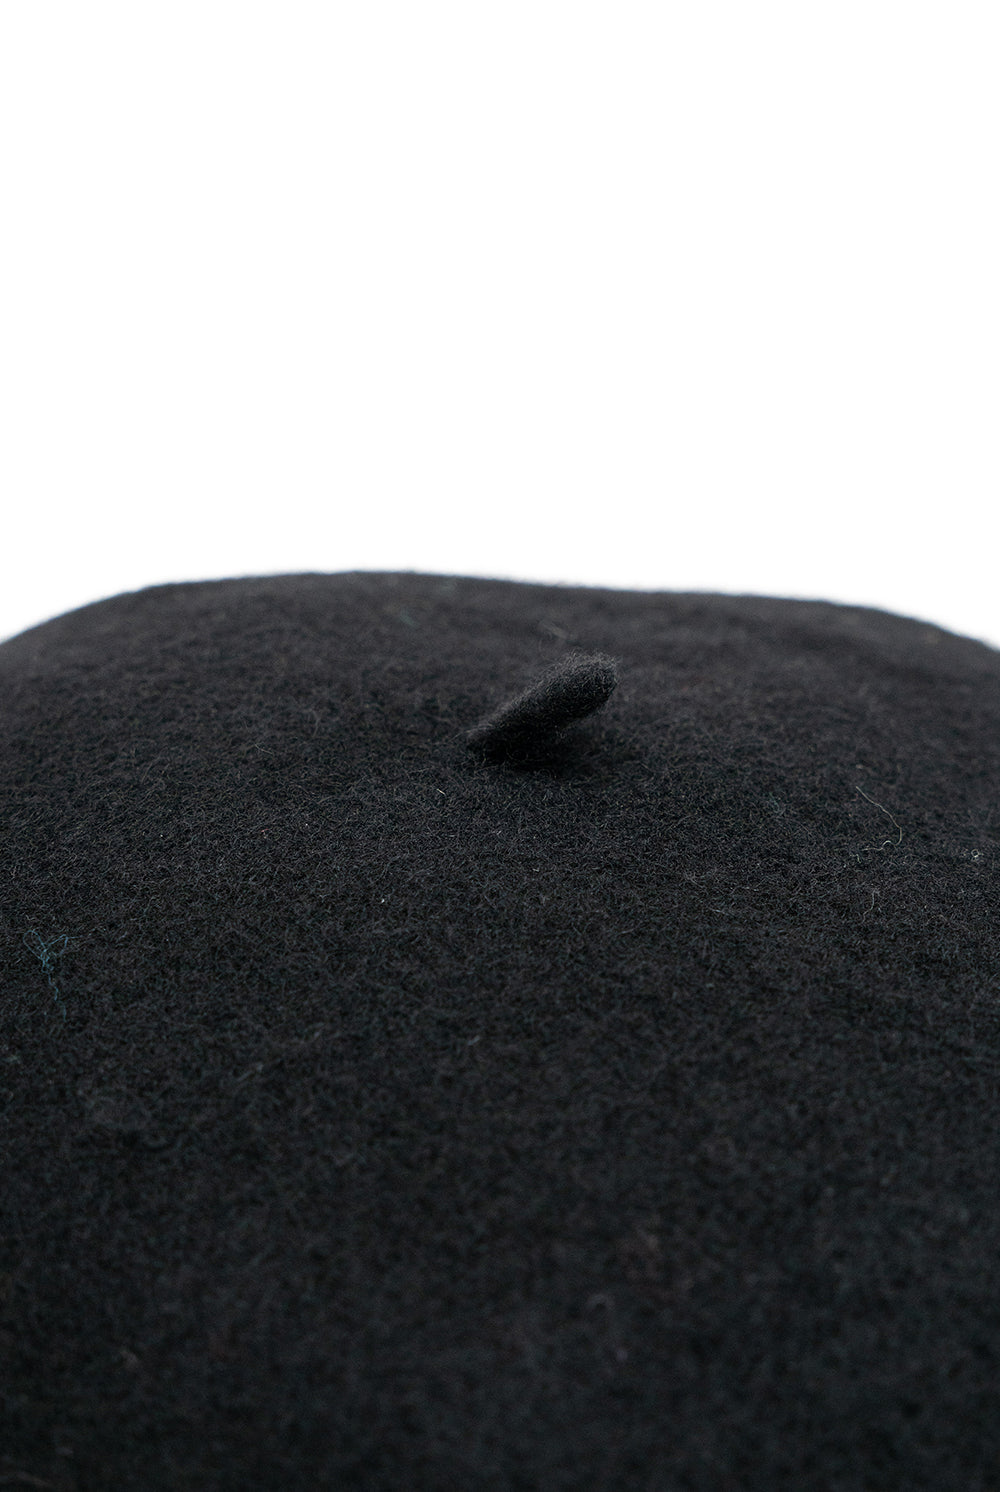 My Accessories London wool Beret in Black| Hat | Womens Accessories | Winter | Autumn